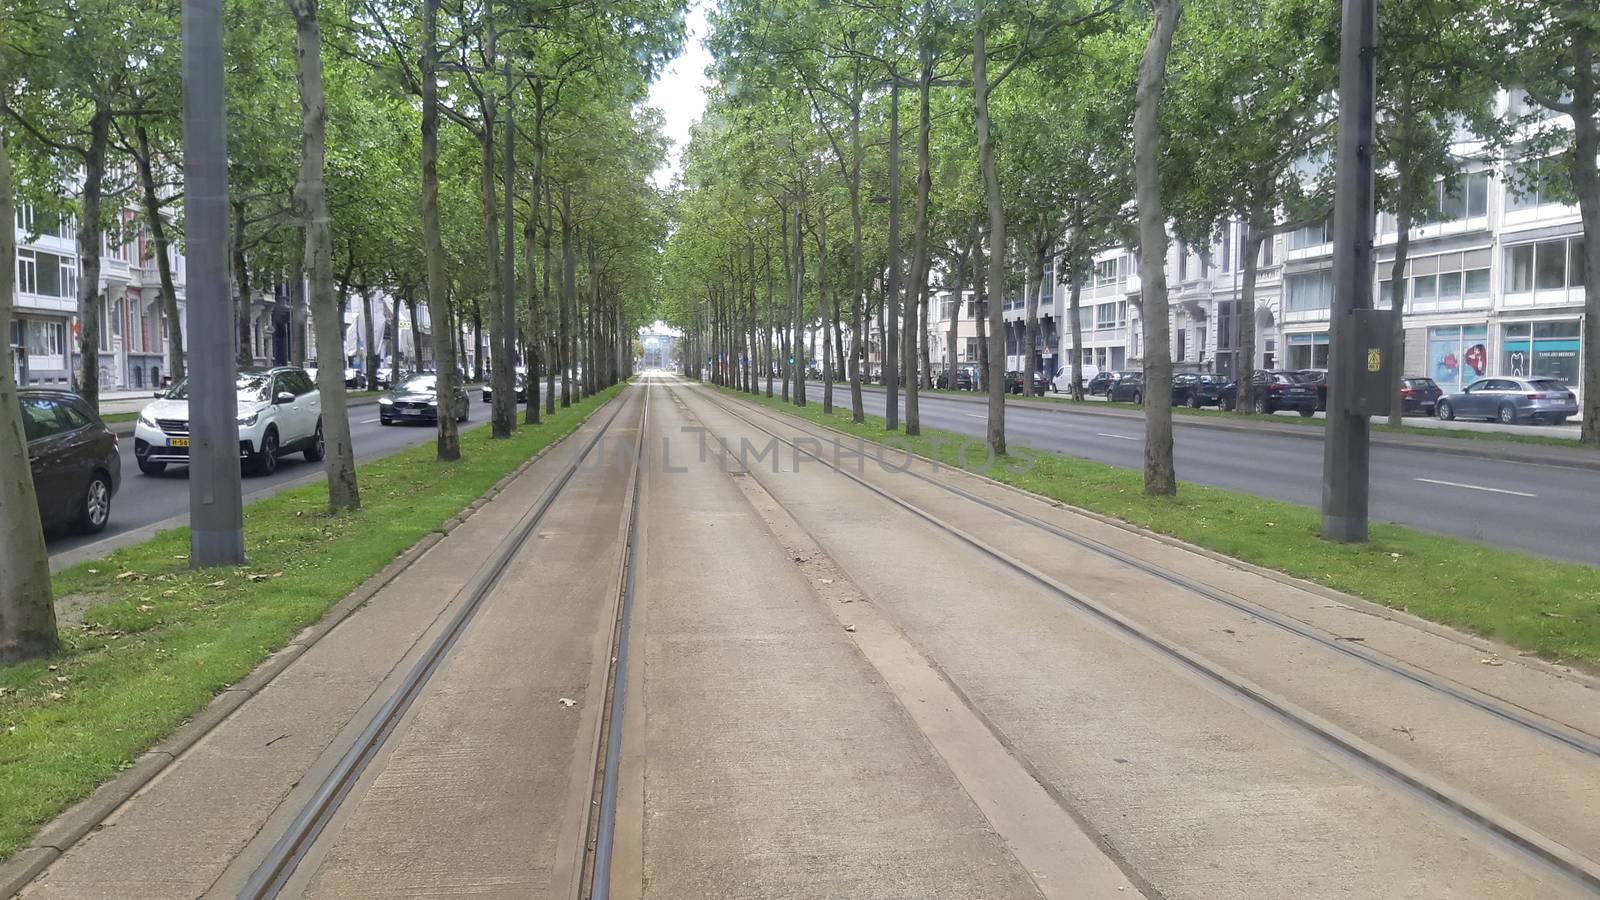 view on the tram tracks on De Leien in the city of Antwerp, Belgium by kb79